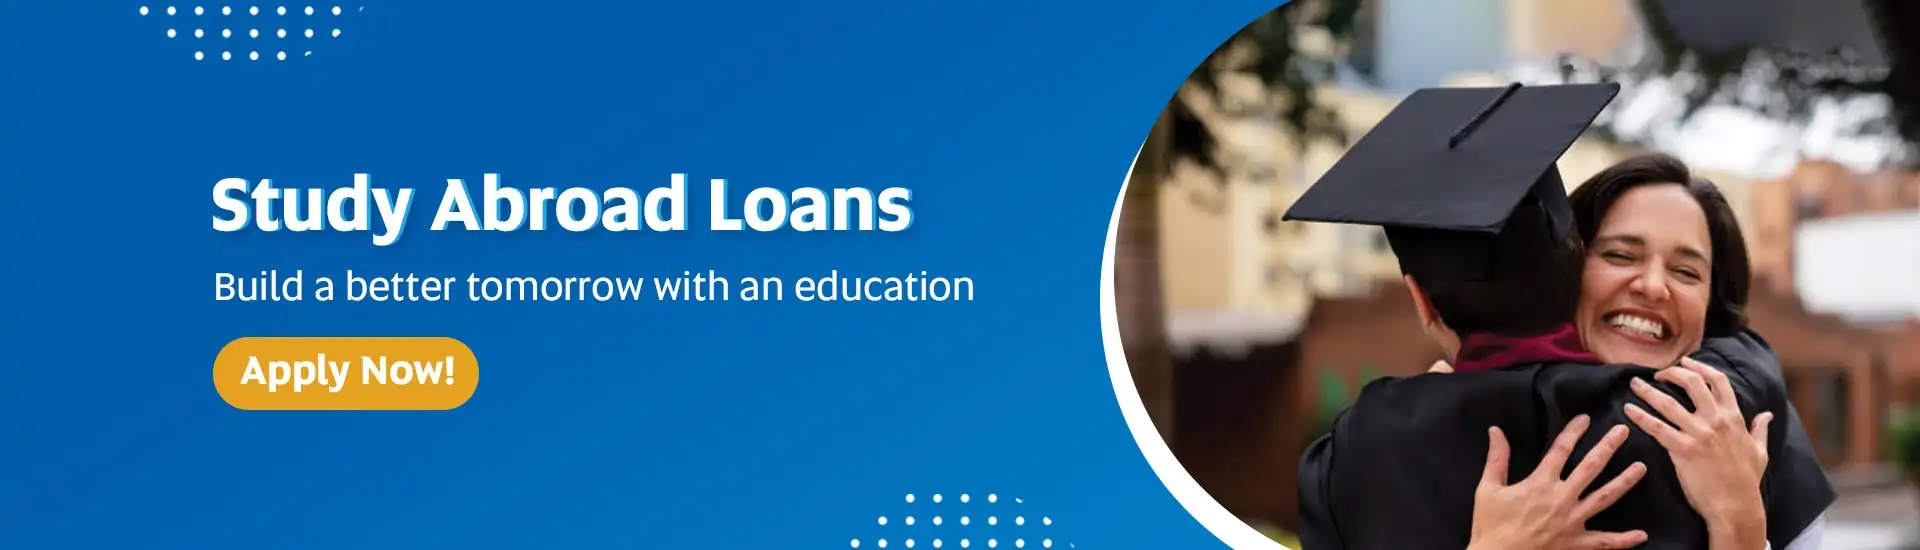 Study Abroad Loans